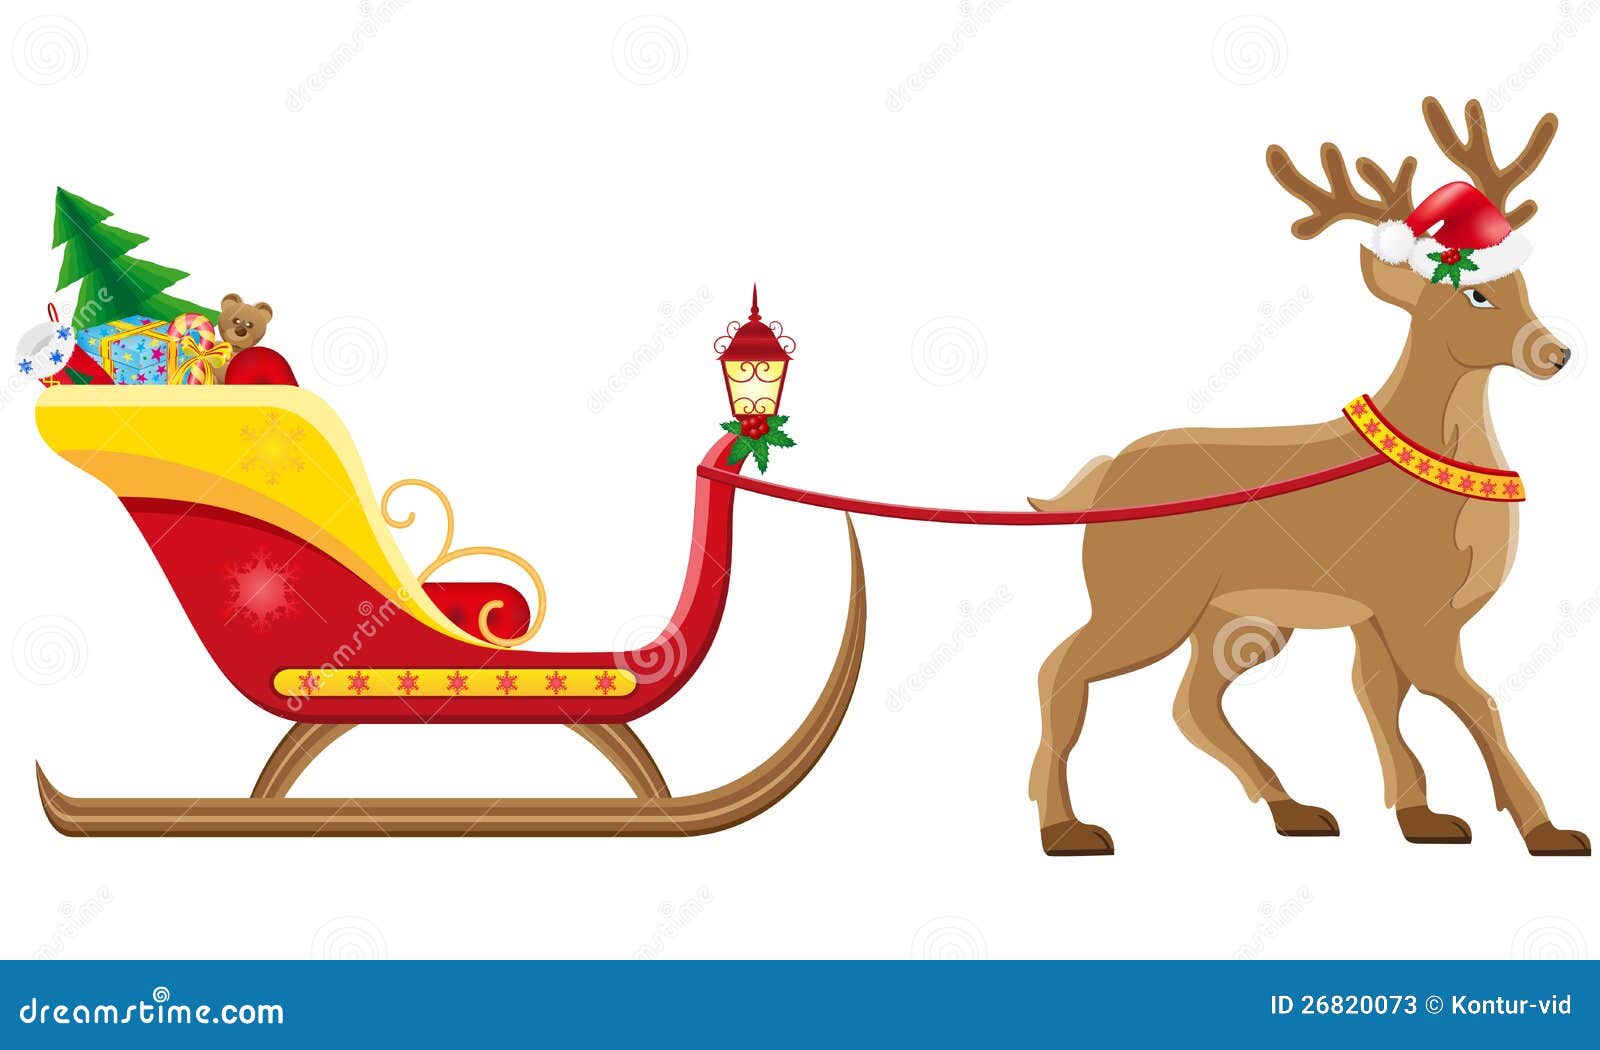 Christmassanta Sleigh With Reindeer Stock Photos - Image: 26820073